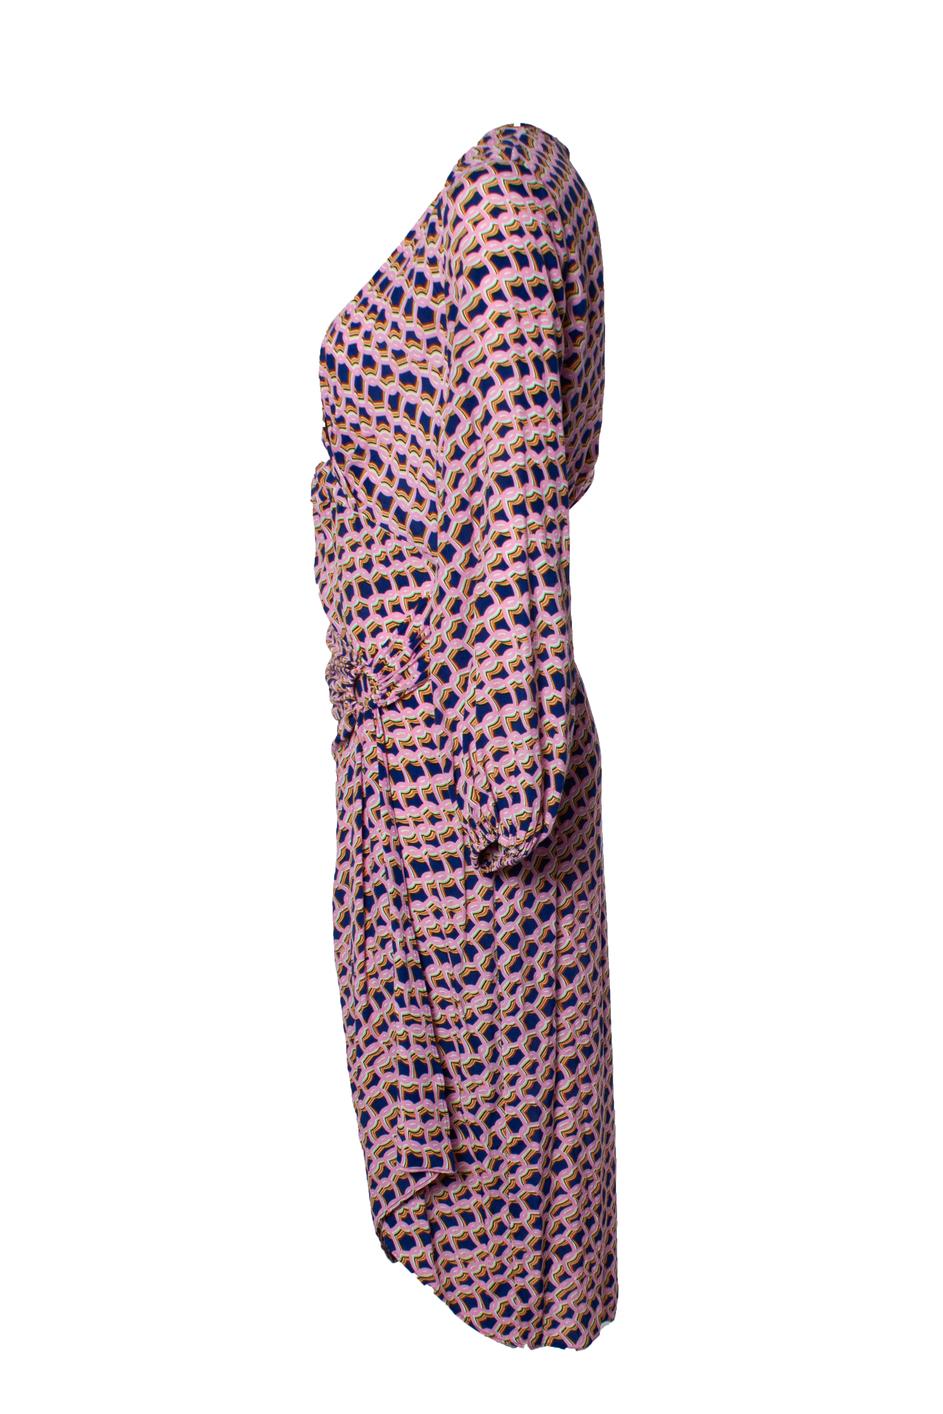 Diane Von Furstenberg, Midi dress with graphic print In Excellent Condition For Sale In AMSTERDAM, NL